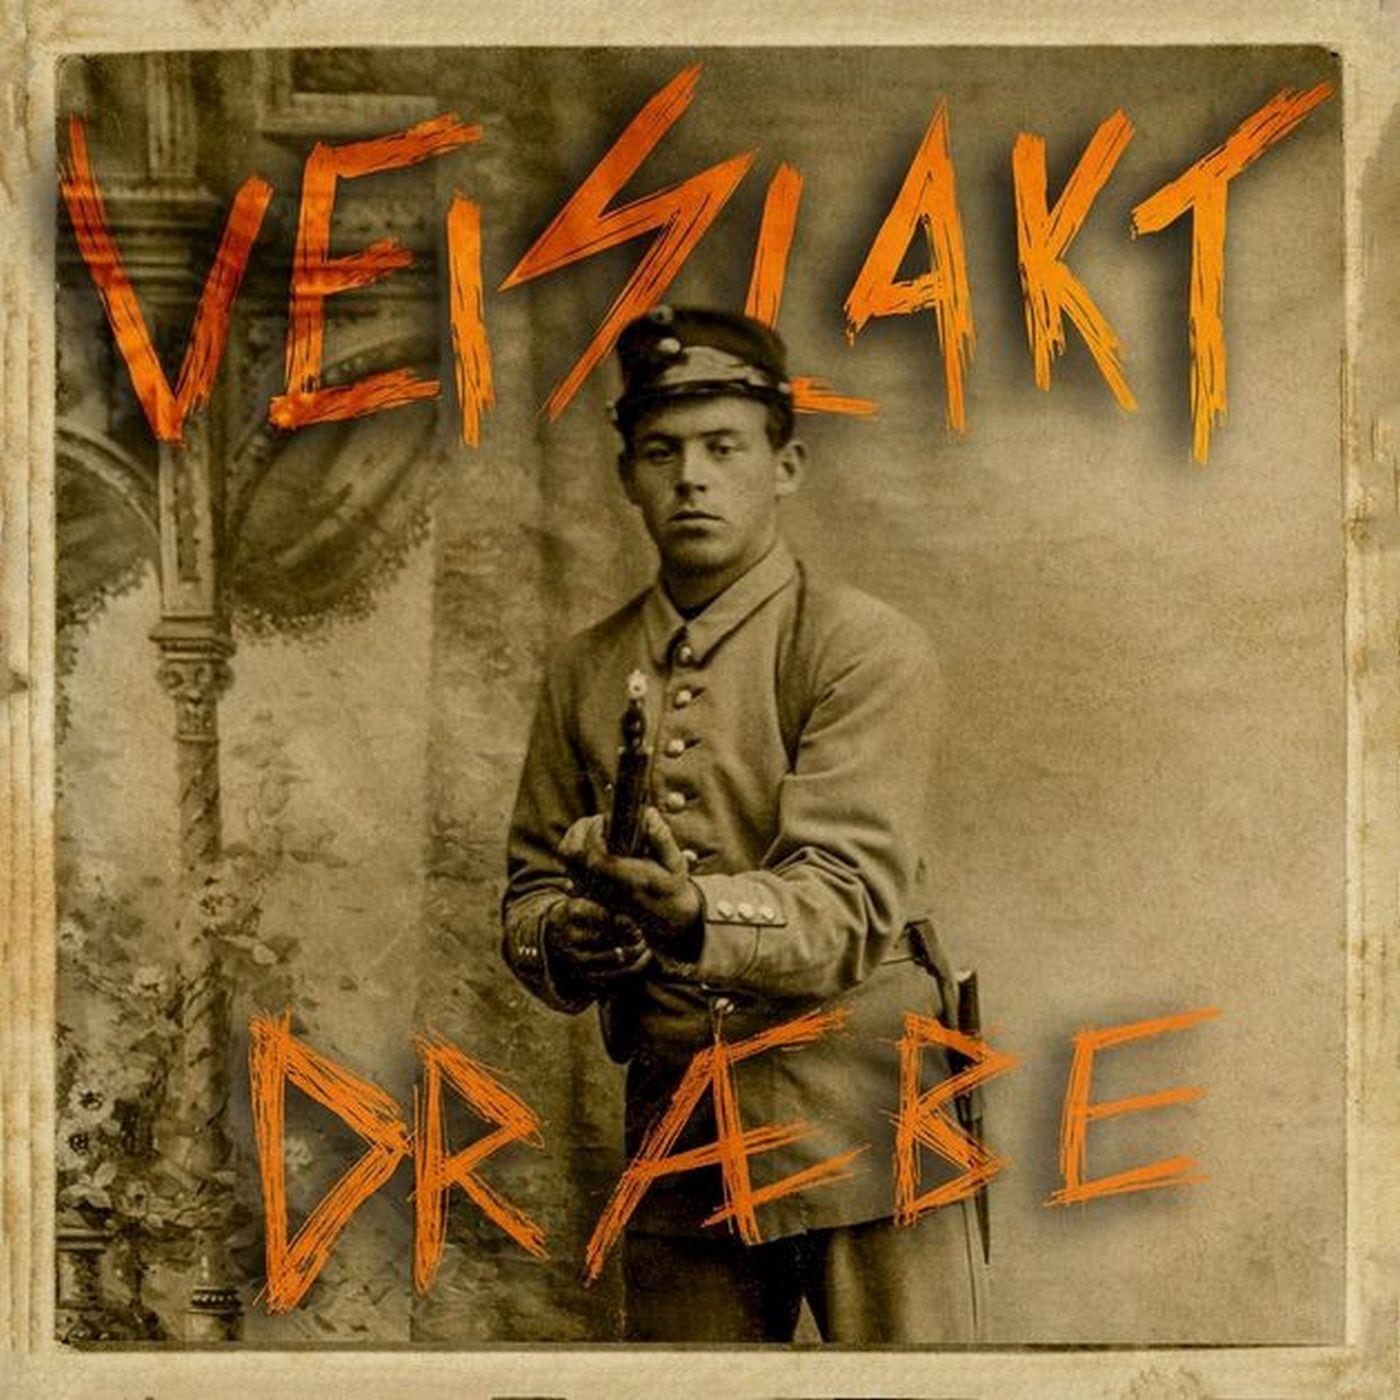 Veislakt - Dræbe (LP)